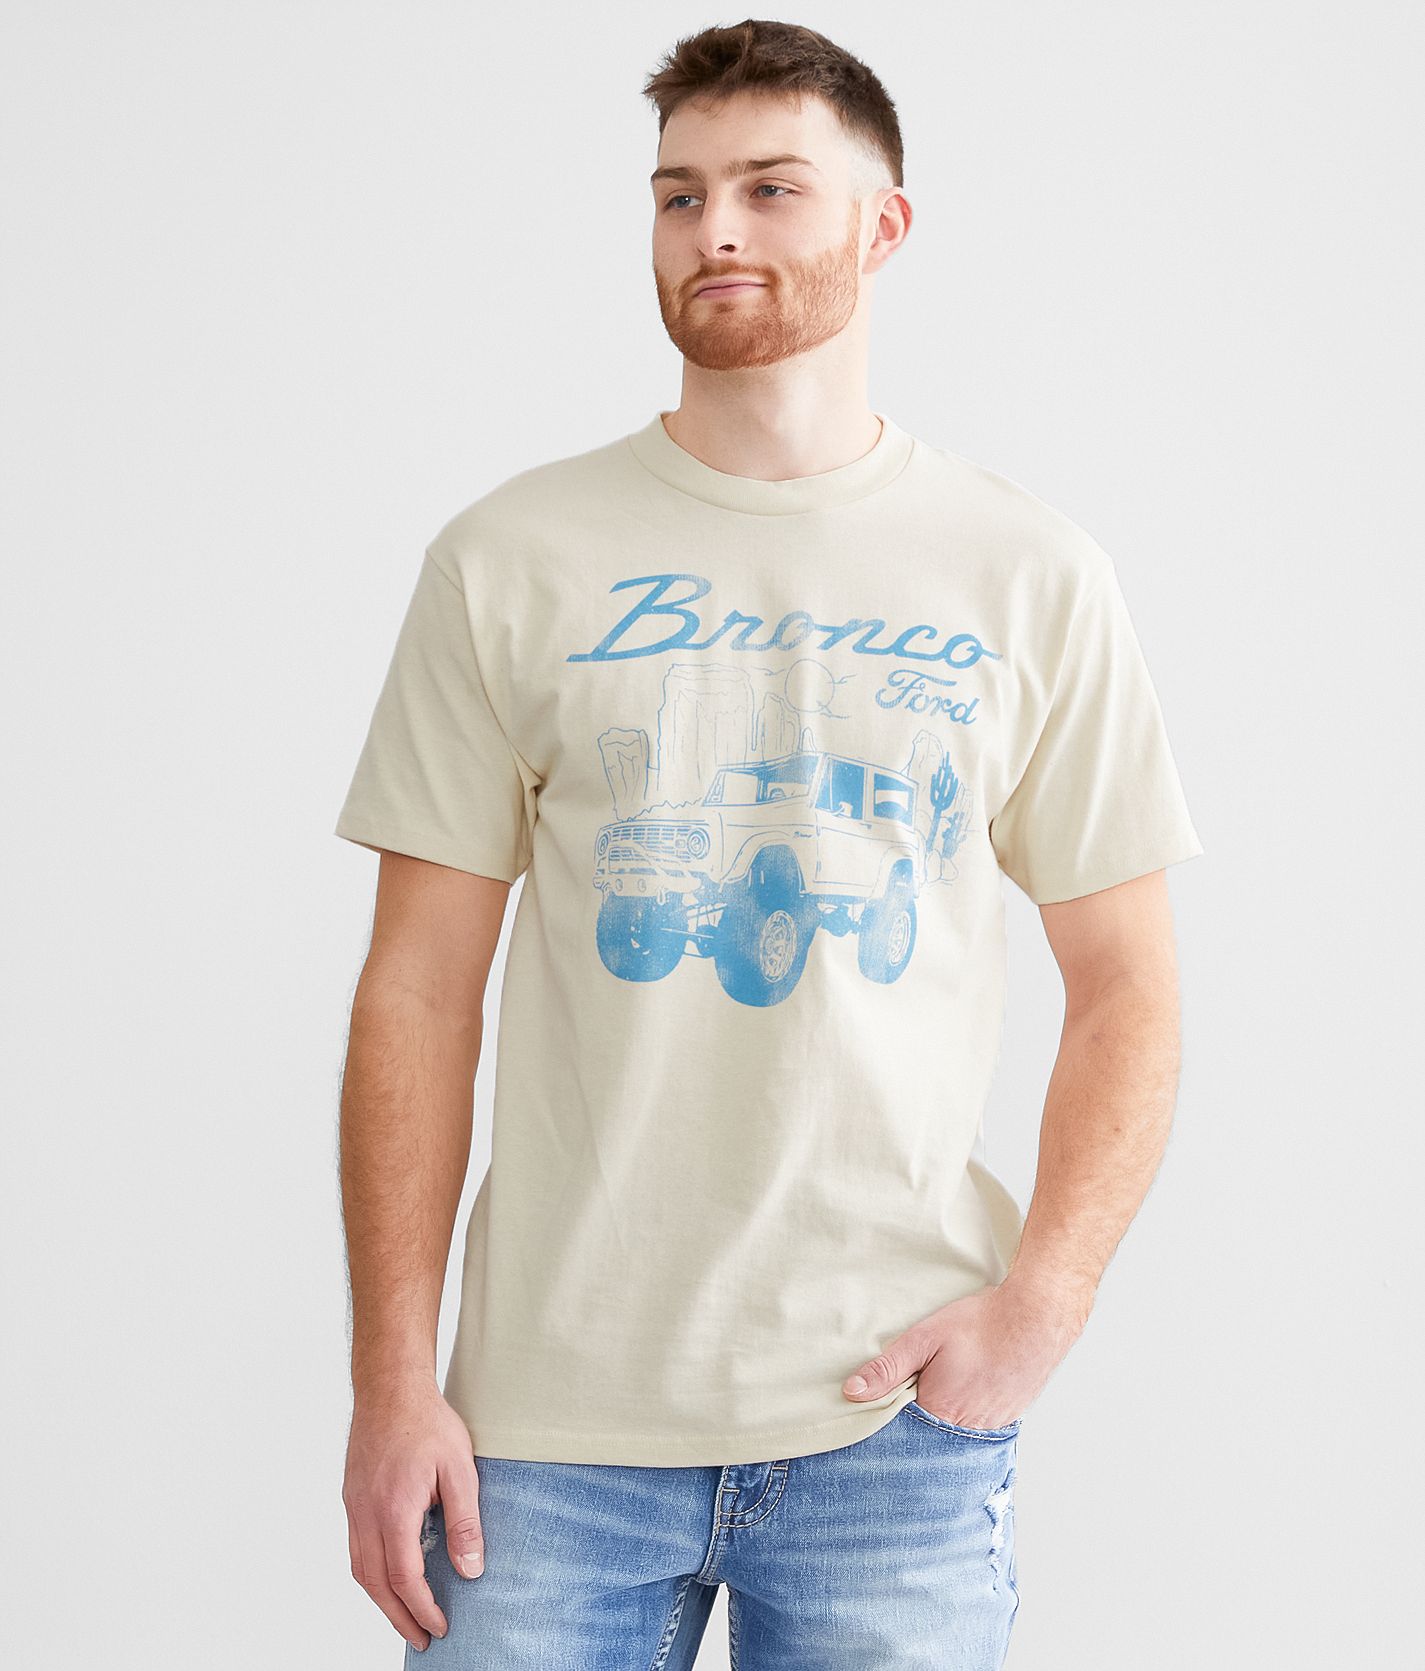 Tee Luv Ford Bronco T-Shirt - Cream Large, Men's